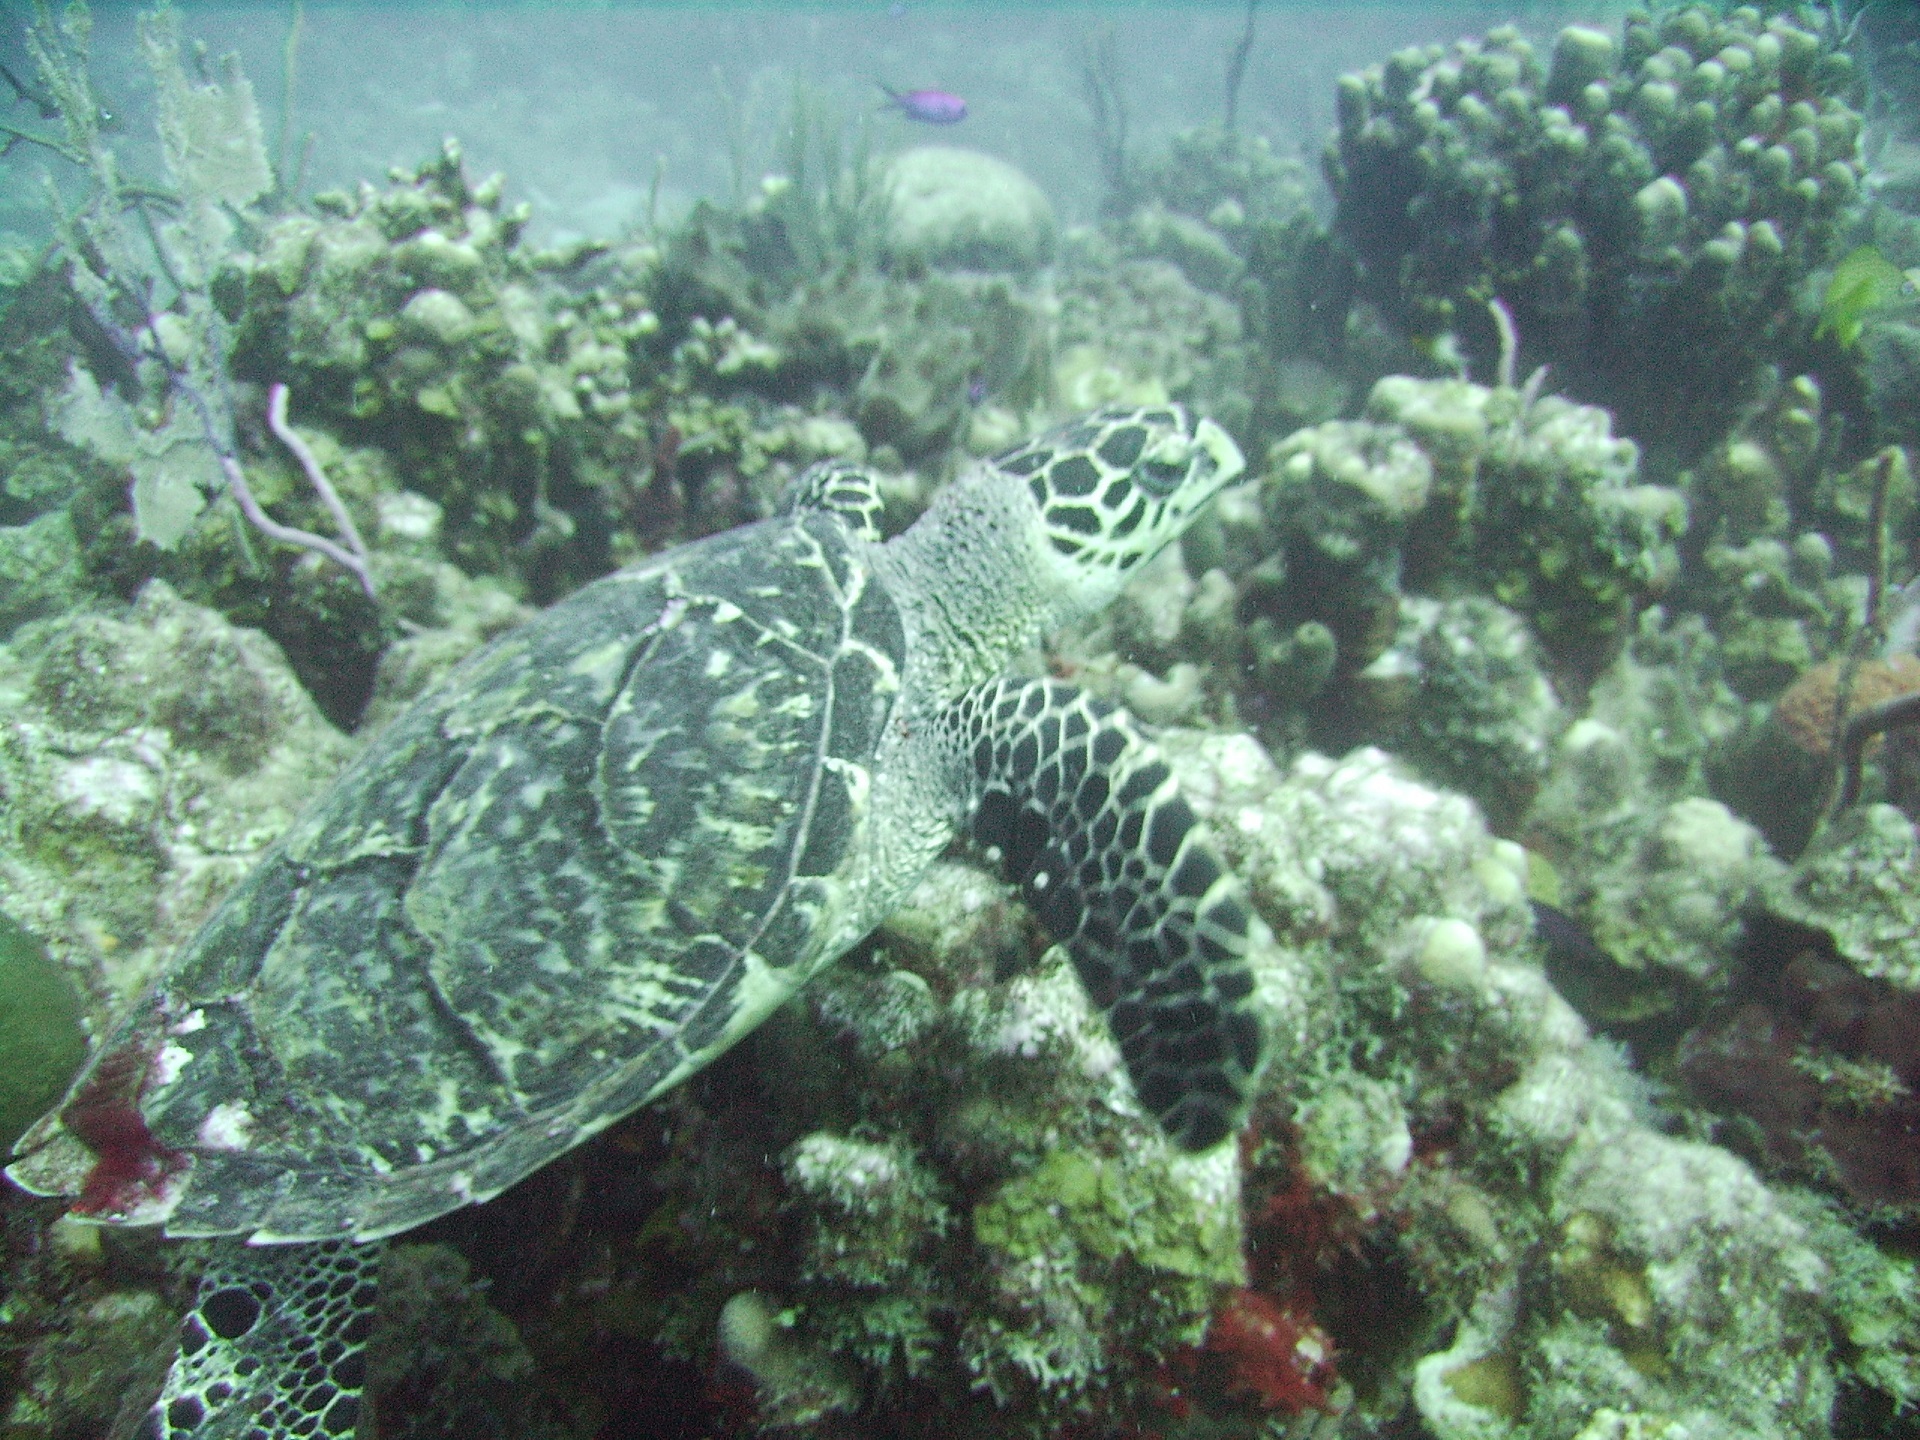 Turtle in the ocean photo